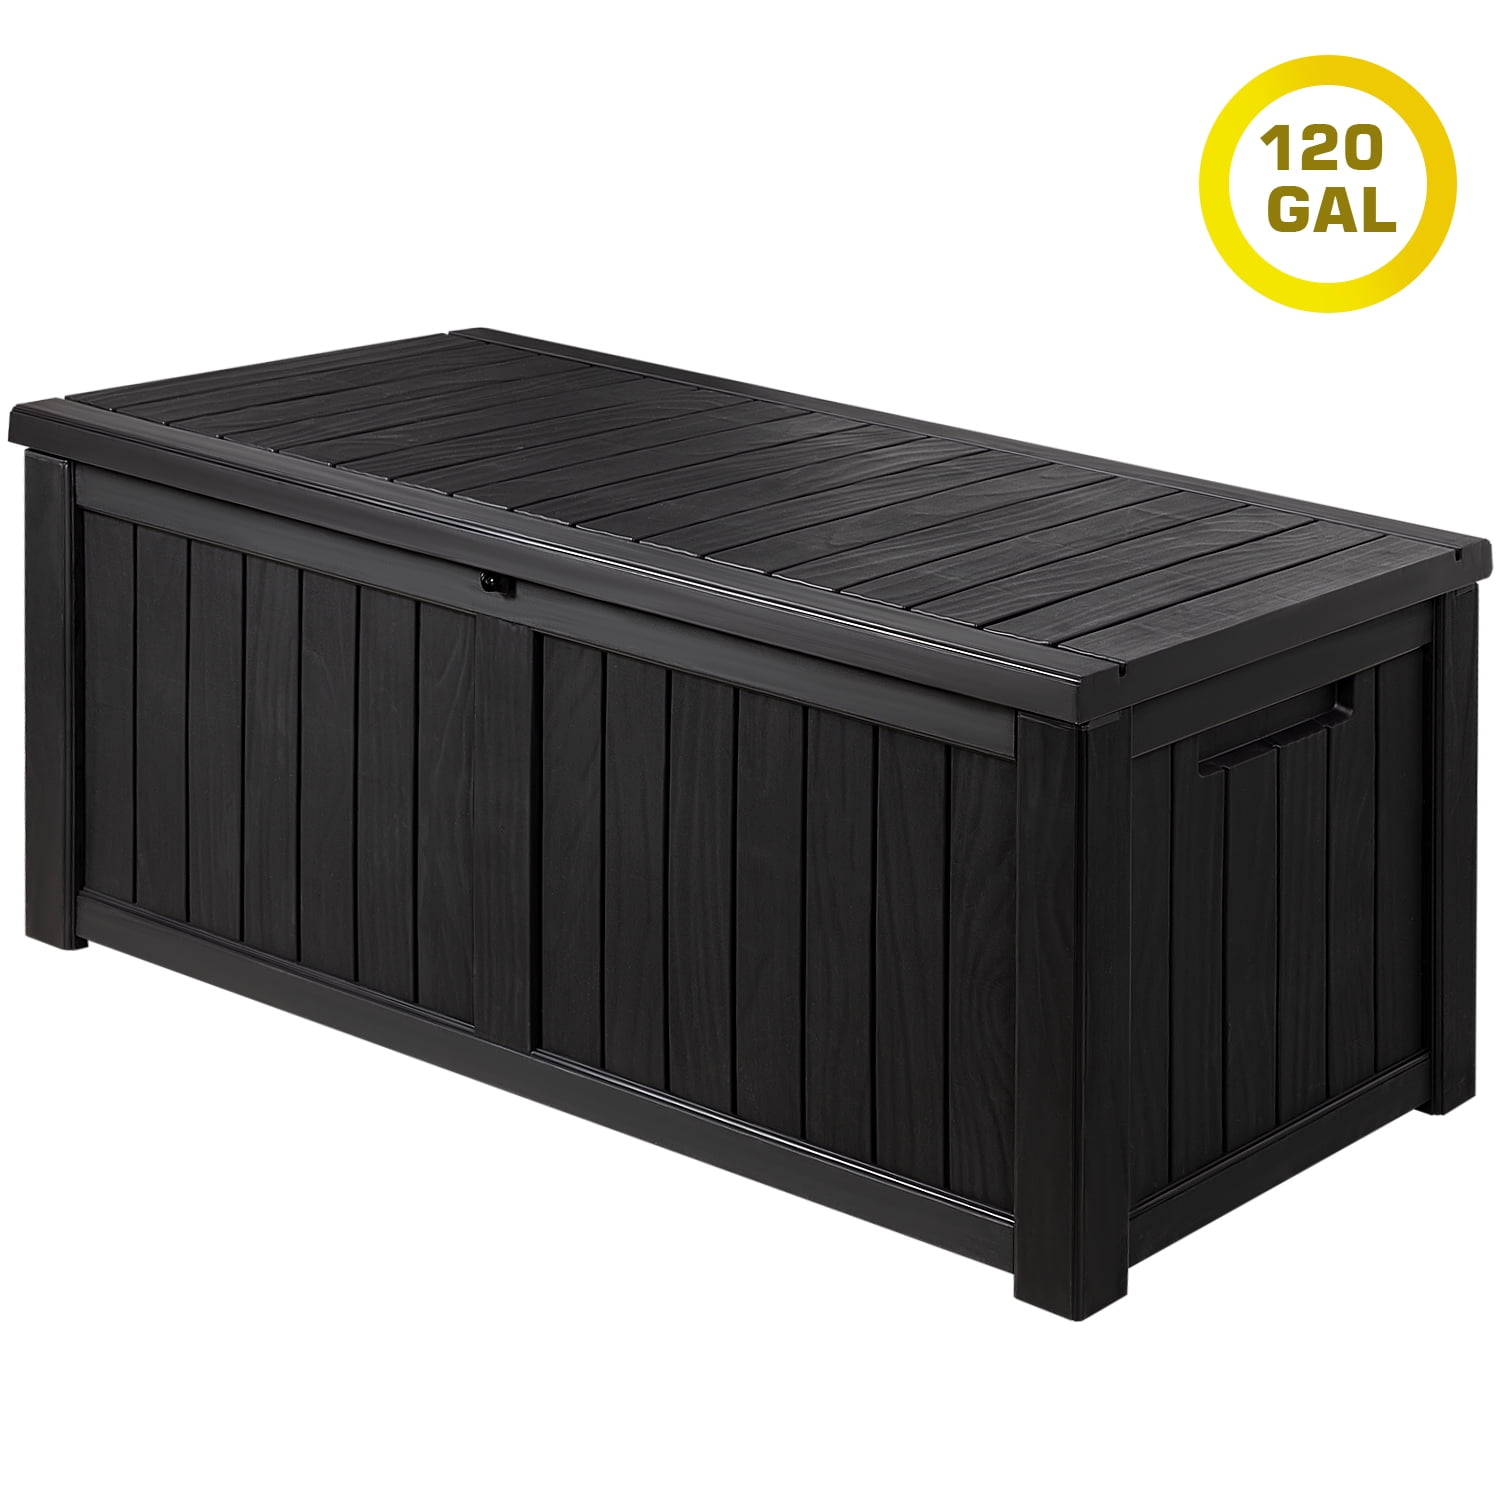 KOOLWOOM Deck Box 120-Gallon Patio Outdoor Plastic Storage 47.2 L x 24.01 W x 24.80 H Waterproof Black 